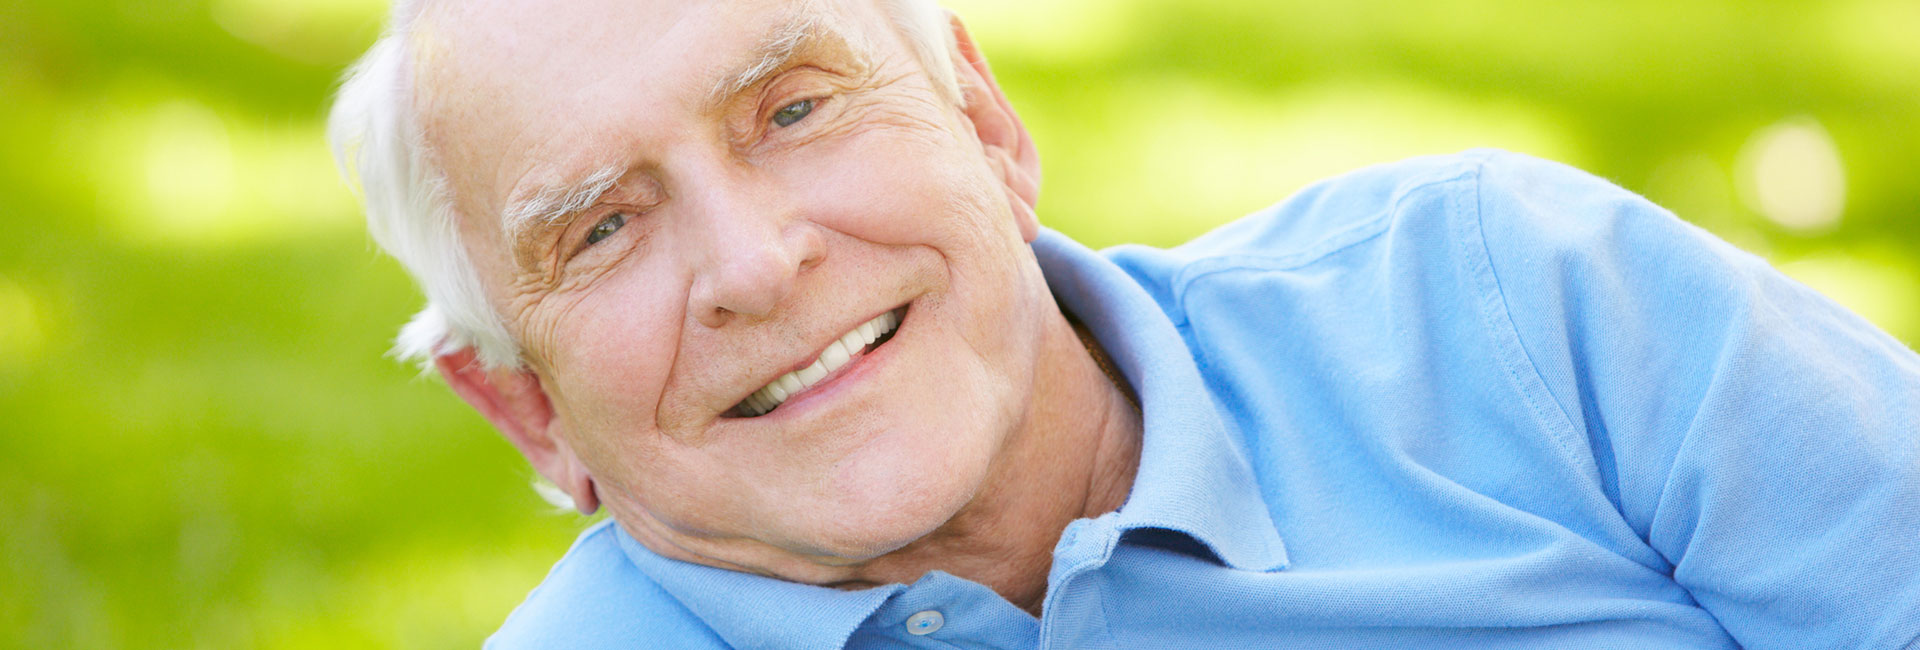 Senior man smiling after gum disease treatment